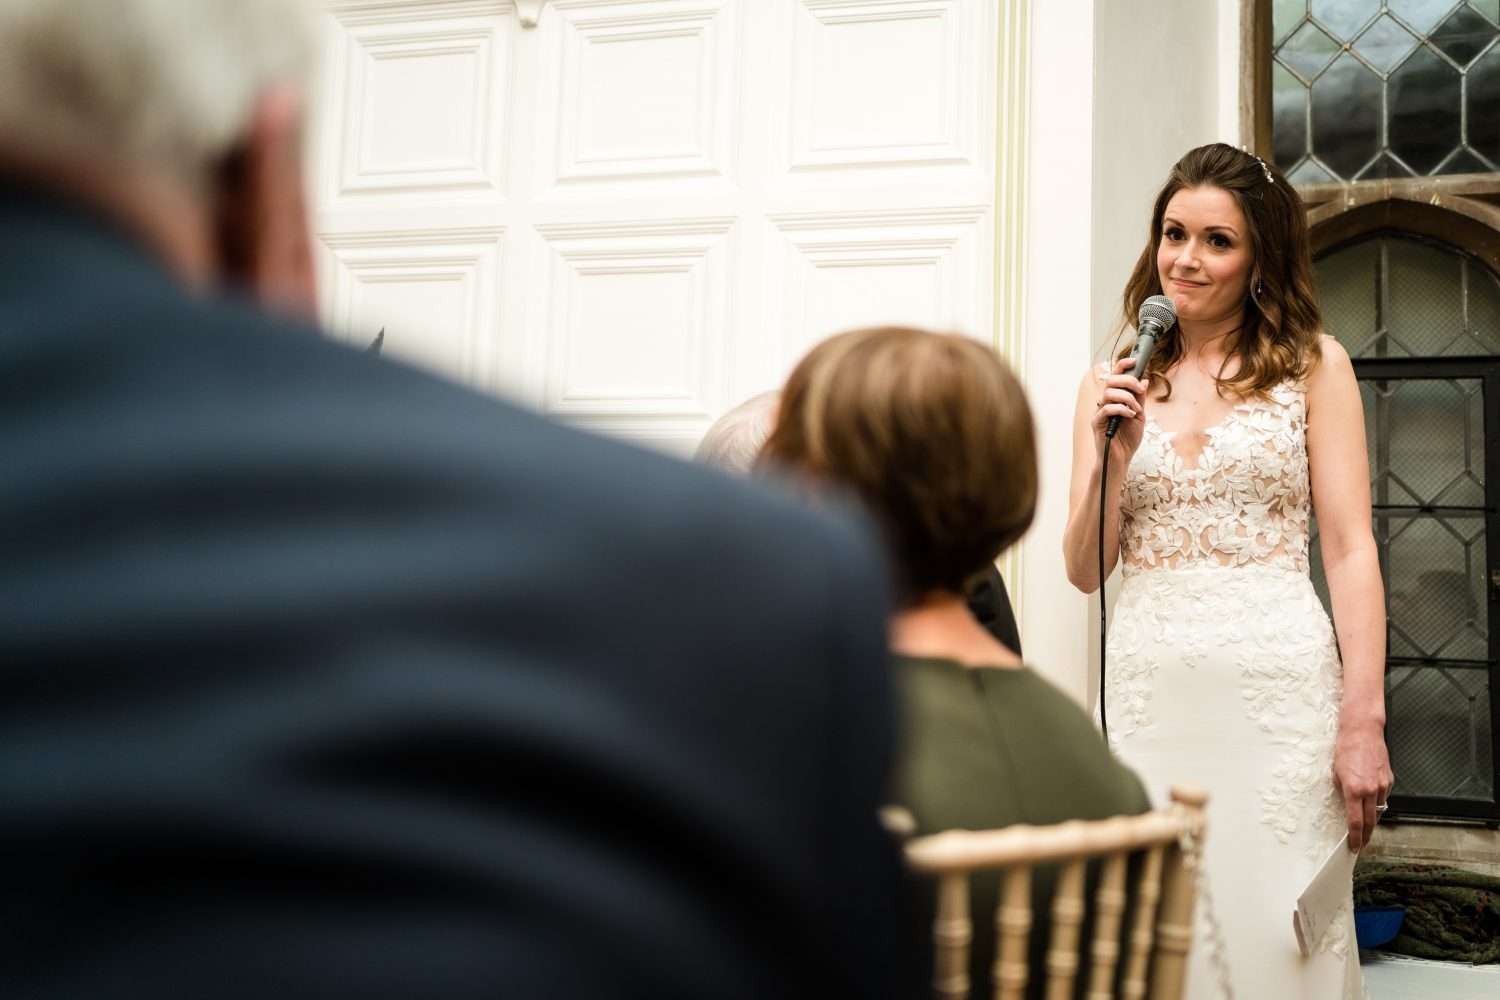 bride gives speech after dinner at her wedding breakfast